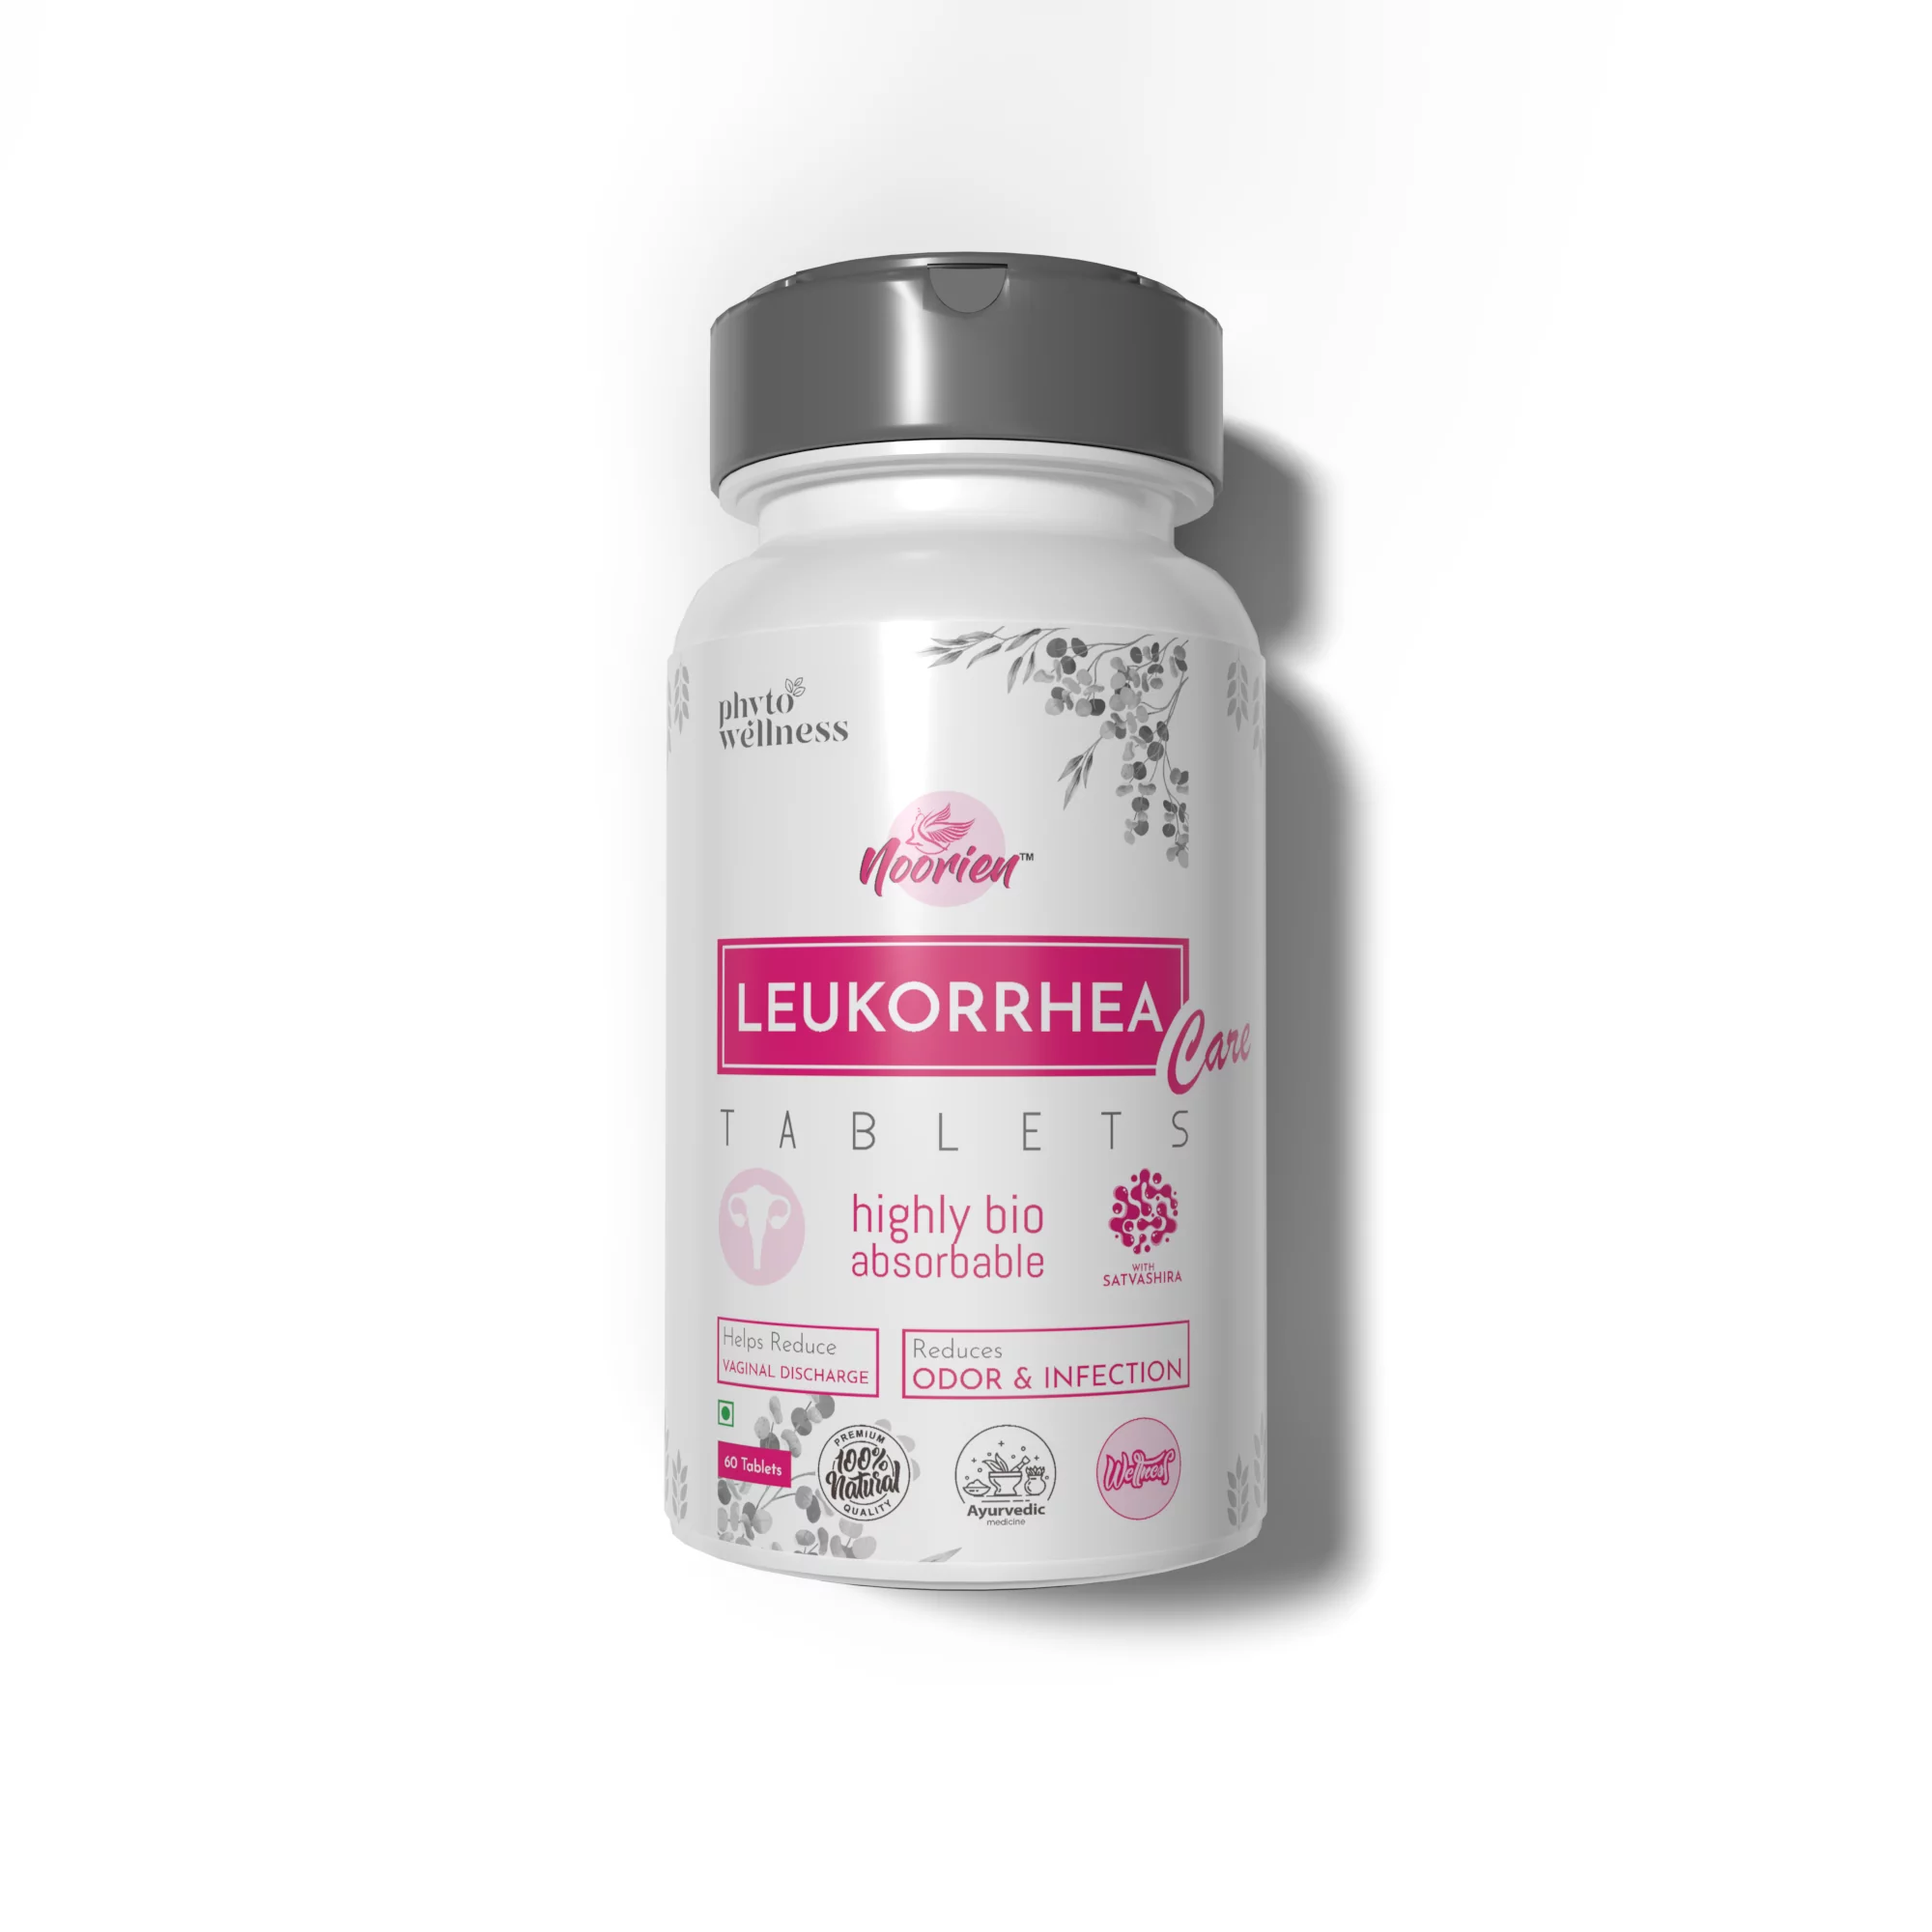 Probiotic Likoria Care 60 Tablets